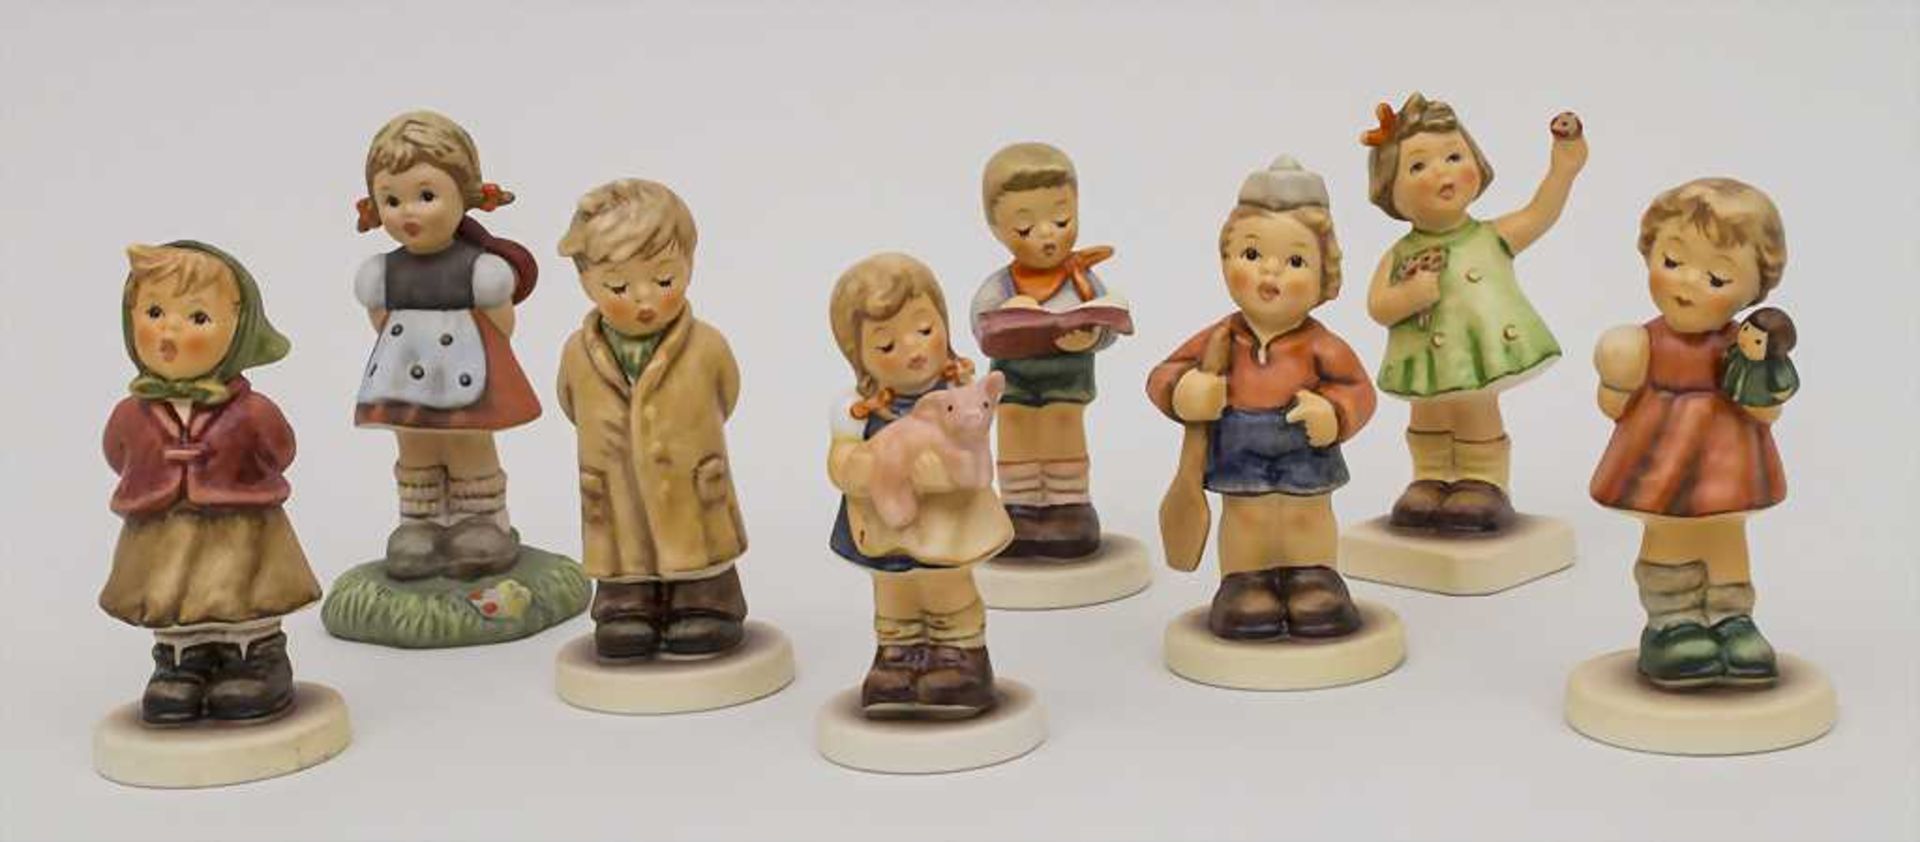 Lot 8 kleine Hummel-Clubfiguren / Small Hummel Figurines, Goebel, Oeslau, 20. Jh. Material: